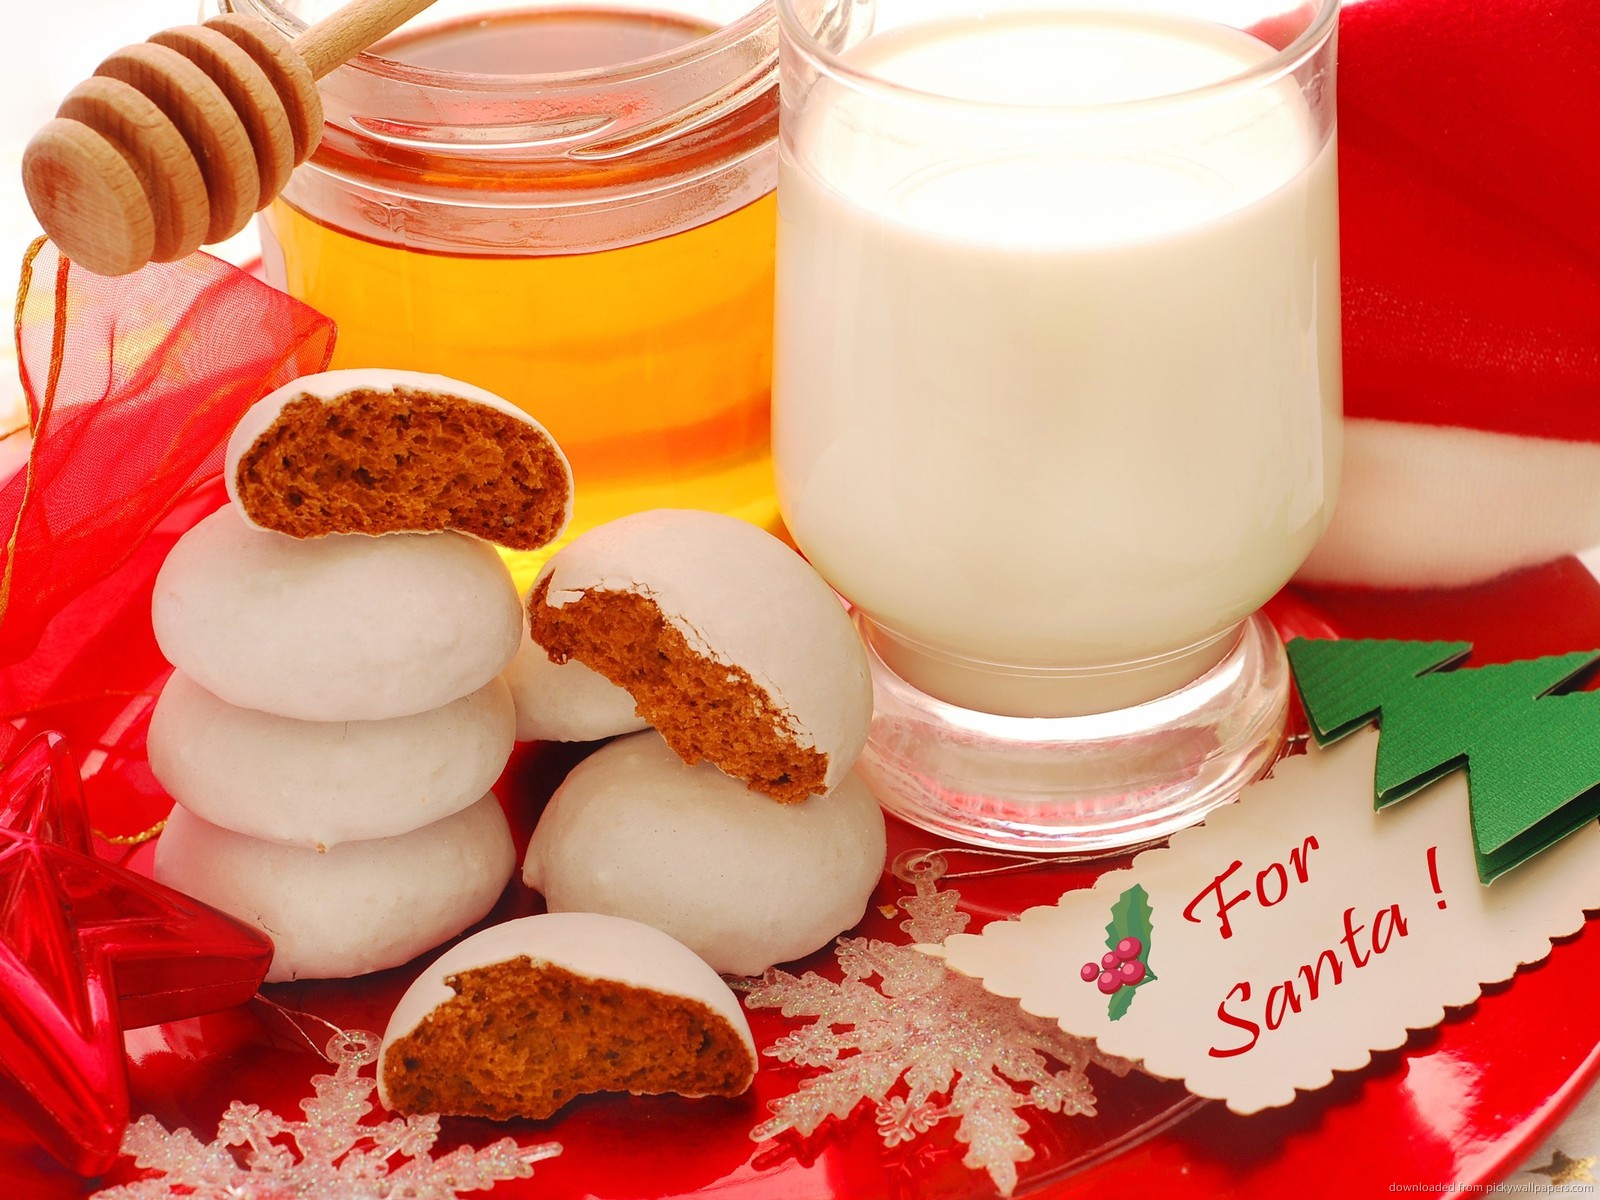 Download 1600x1200 Cookies And Milk For Santa Wallpaper